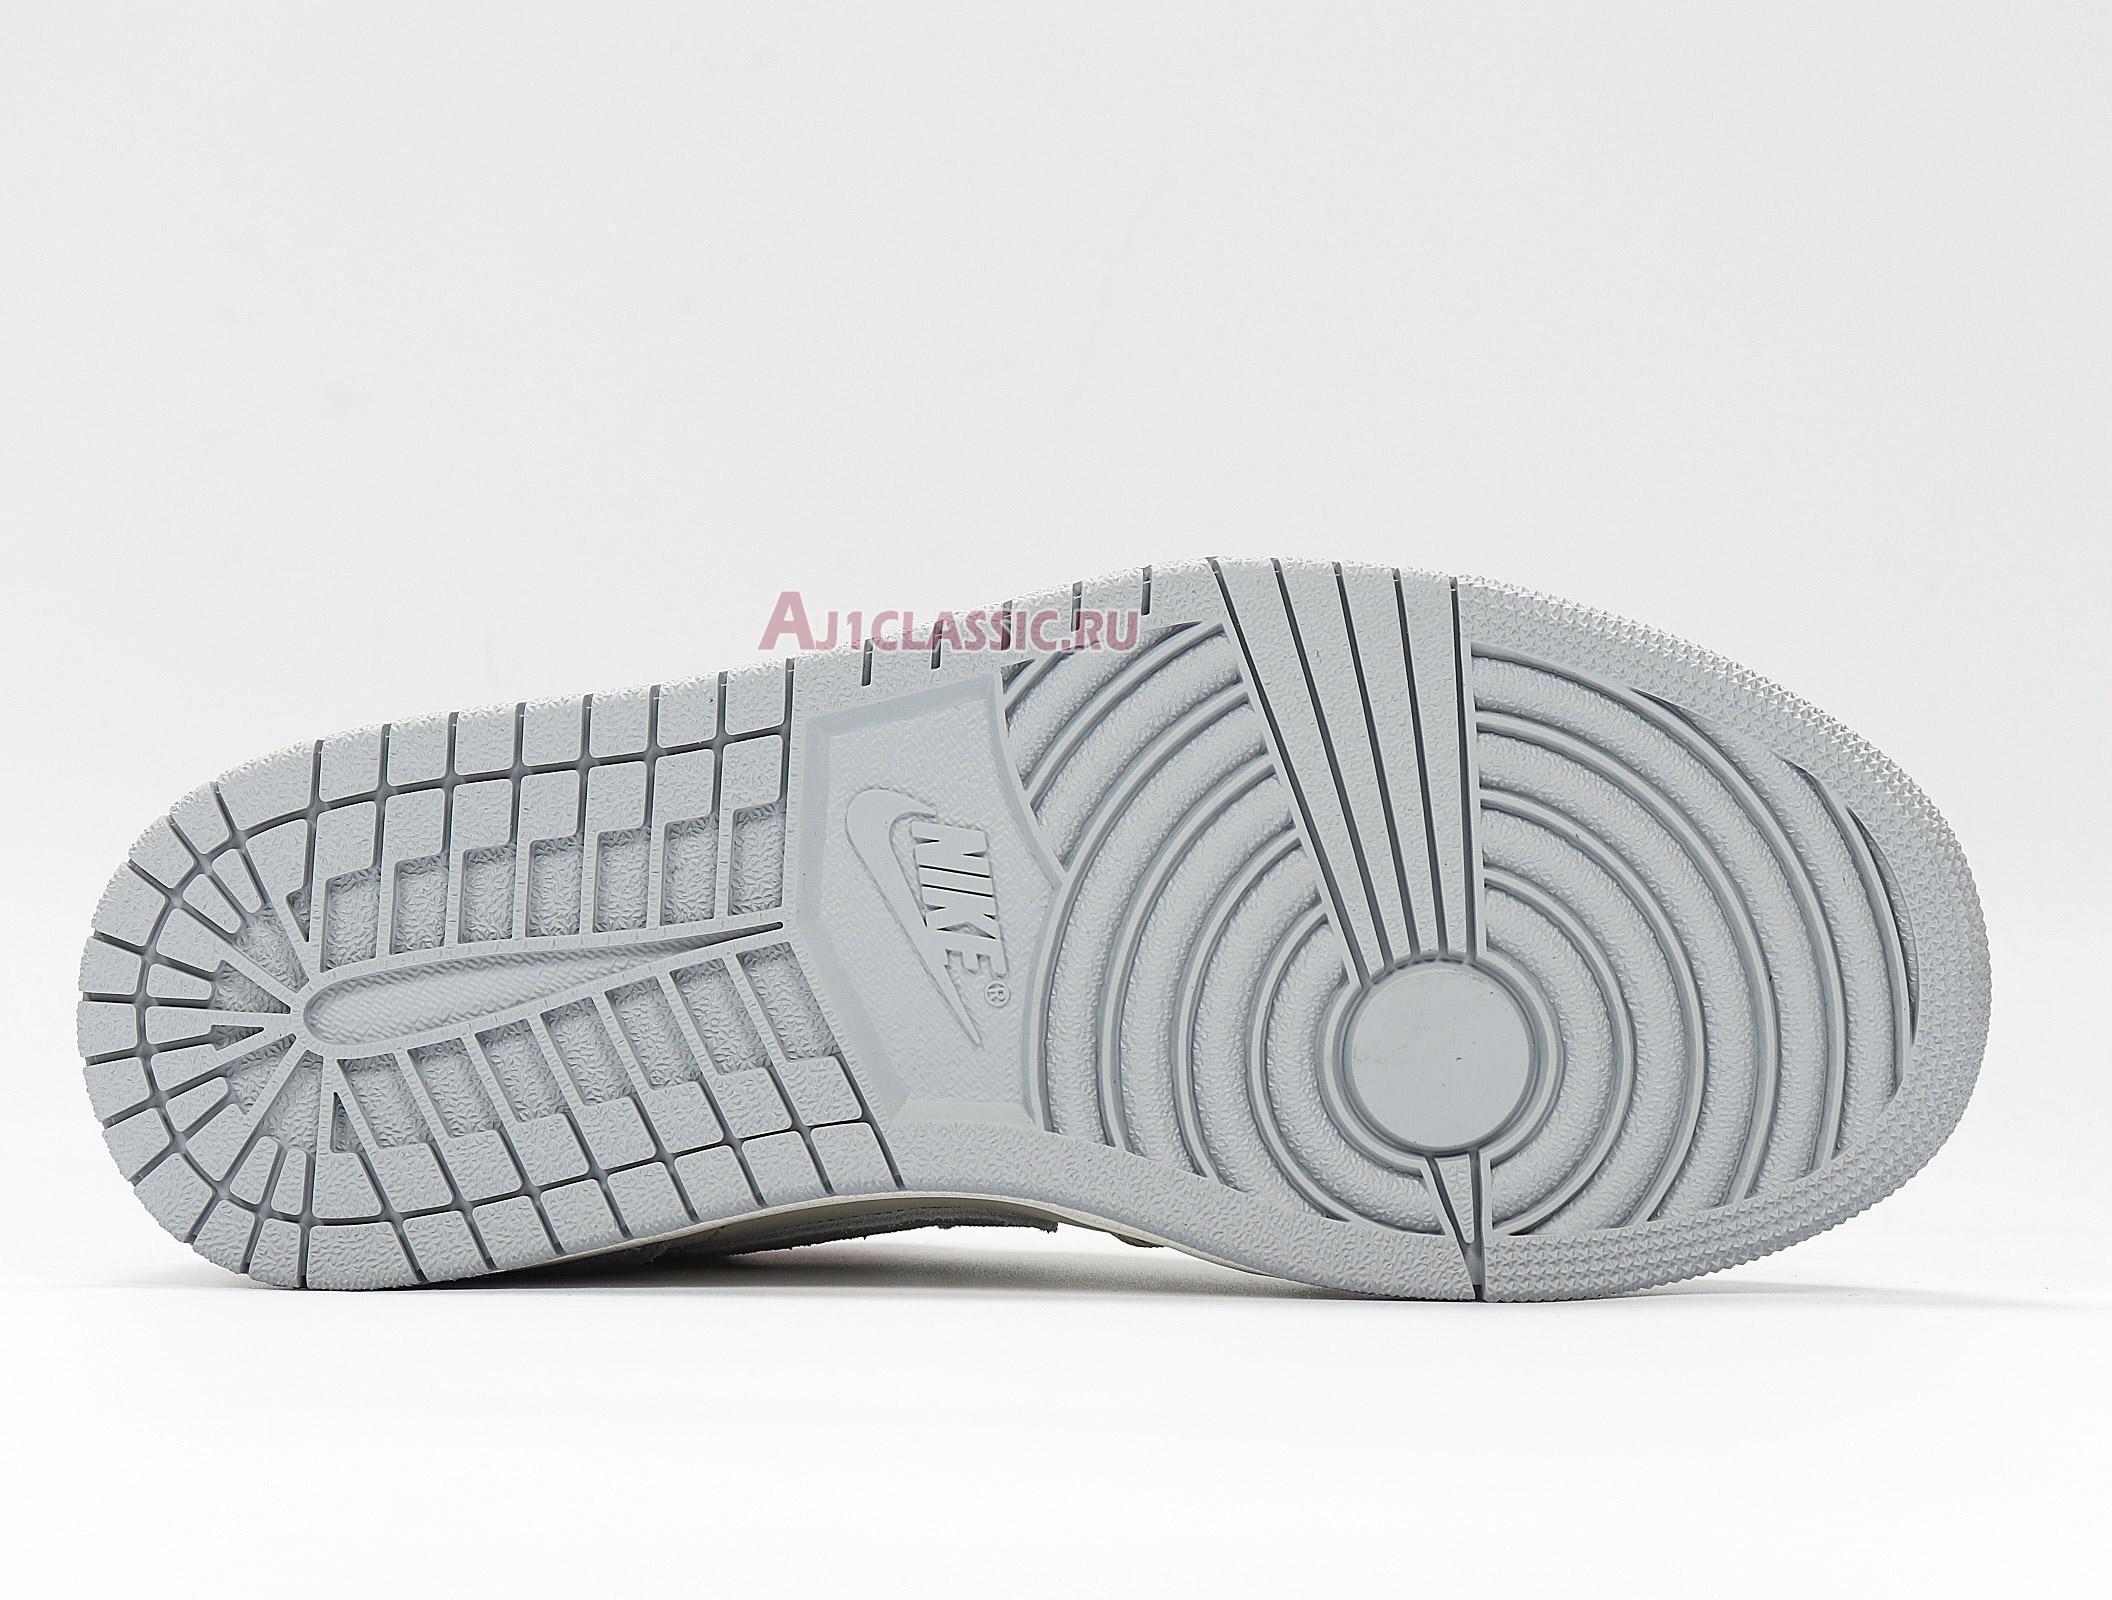 Sneakersnstuff x Air Jordan 1 Mid "Past Present Future" CT3443-100